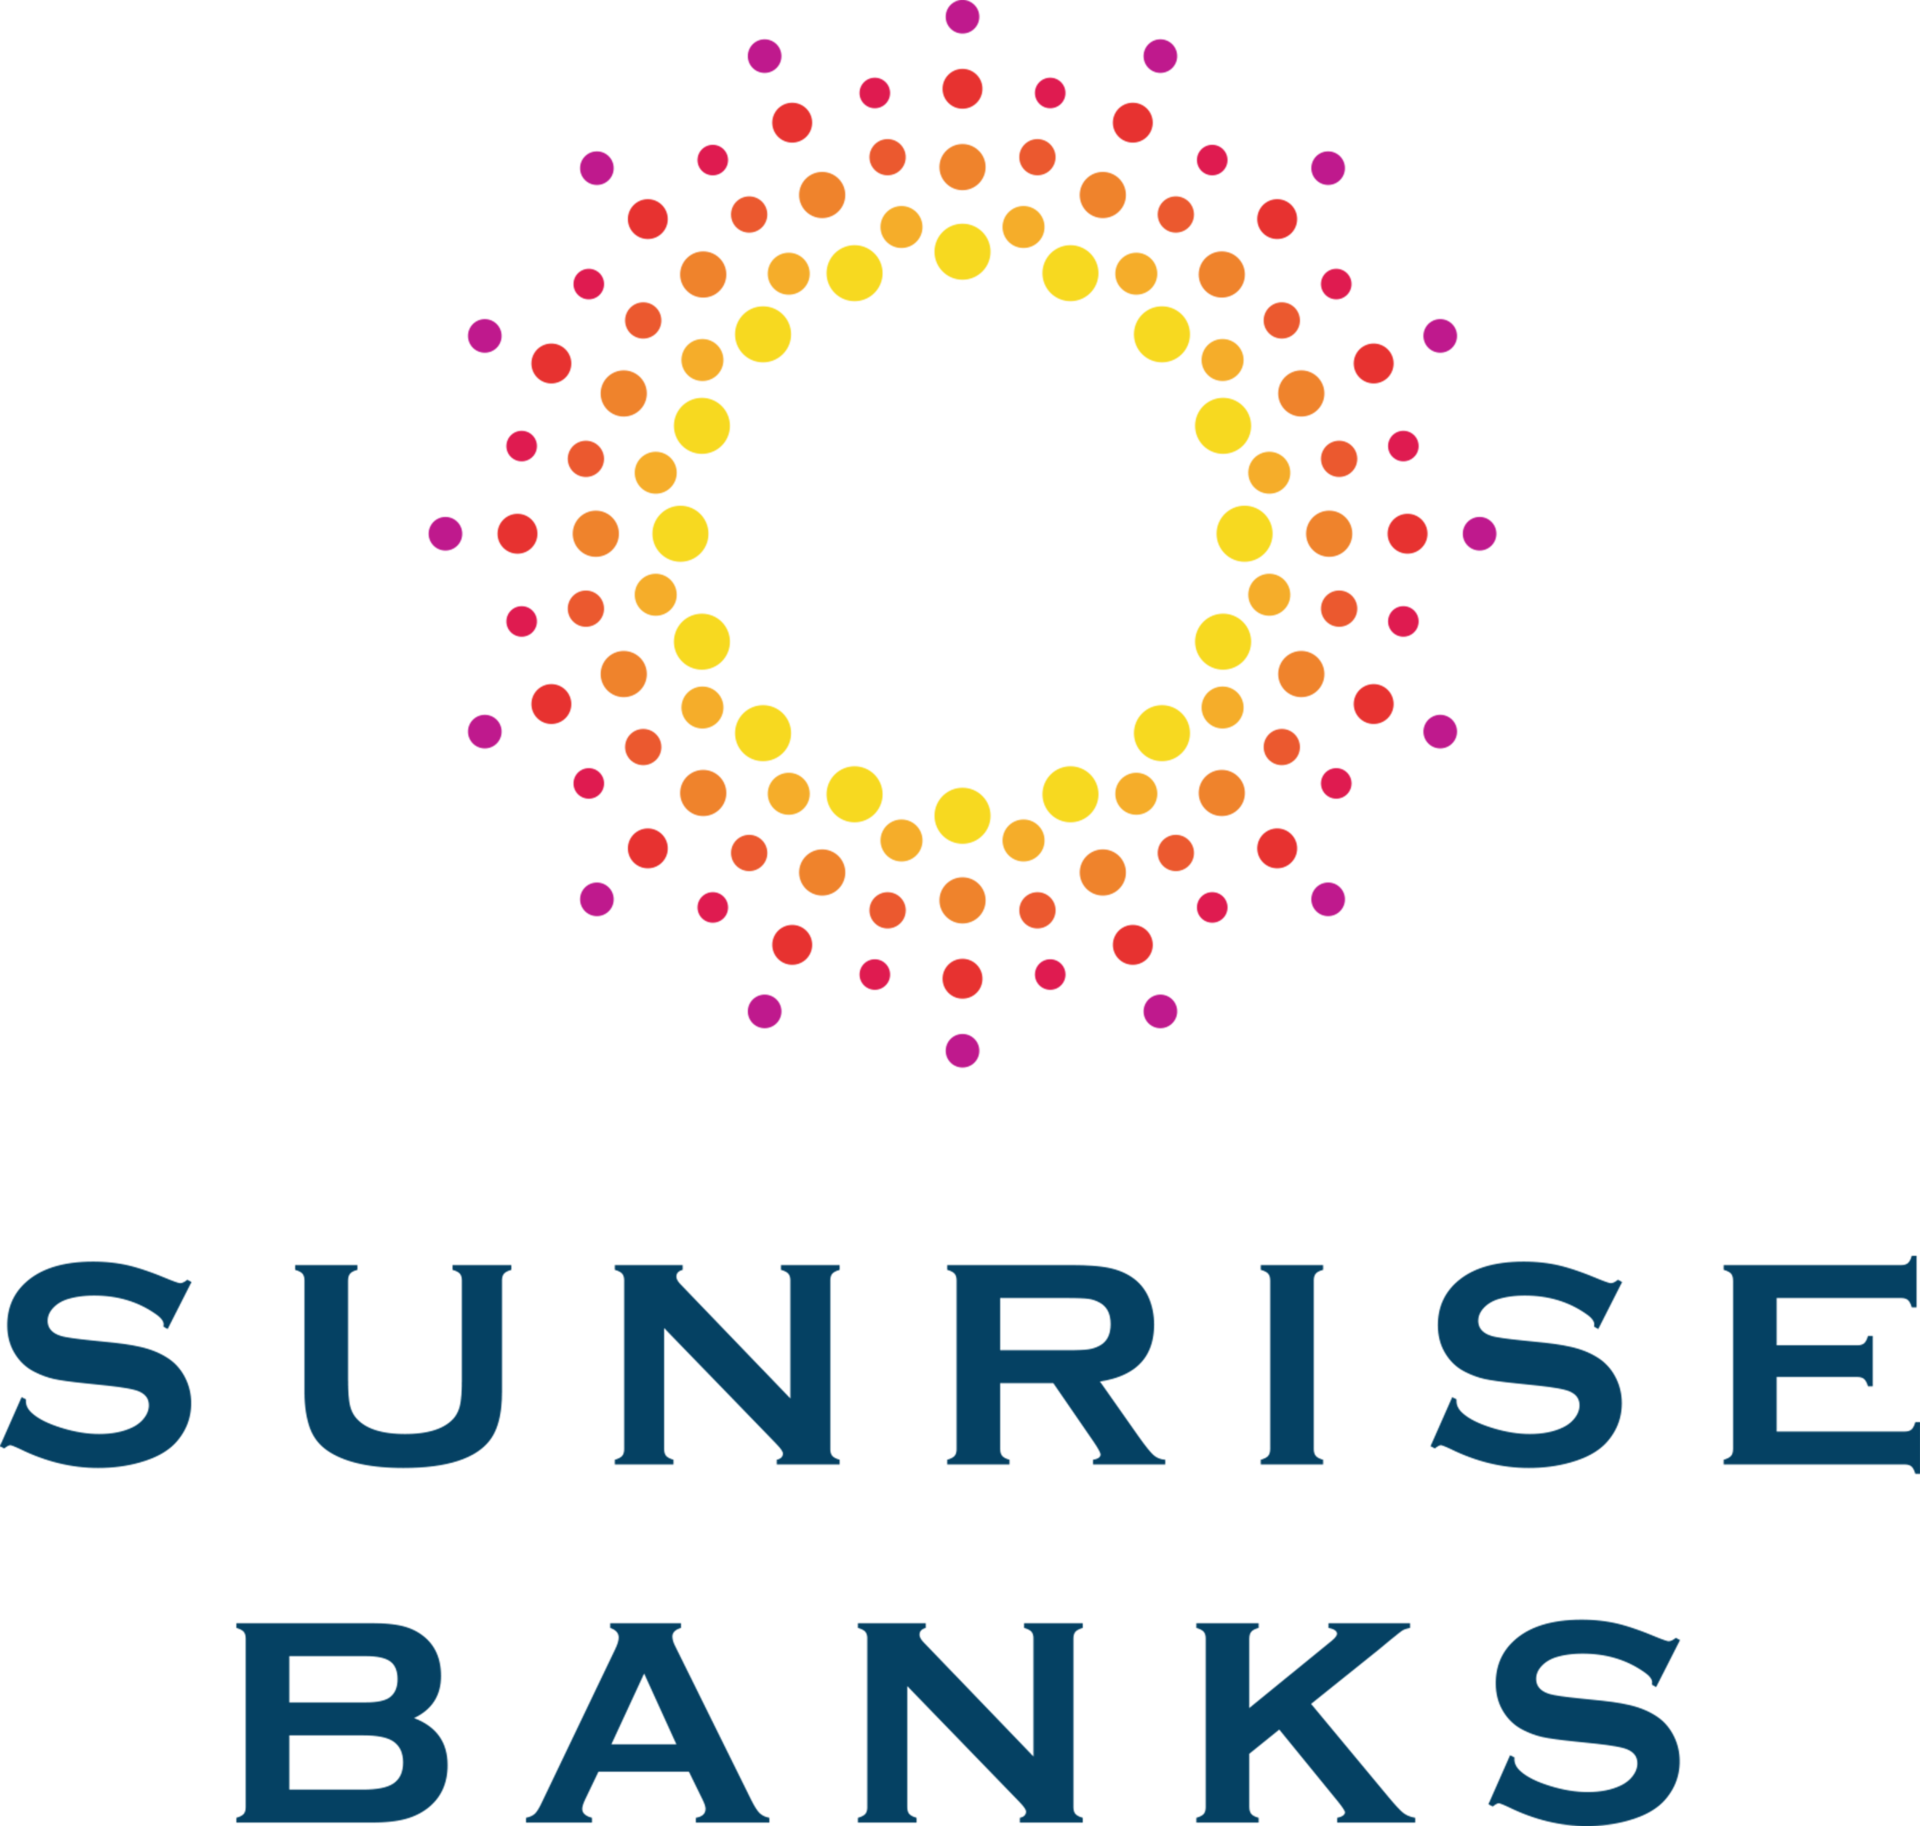 Sunrise service near me. Sunrise Banks. Санрайз логотип. Sunrise сервис. Восход логотип.